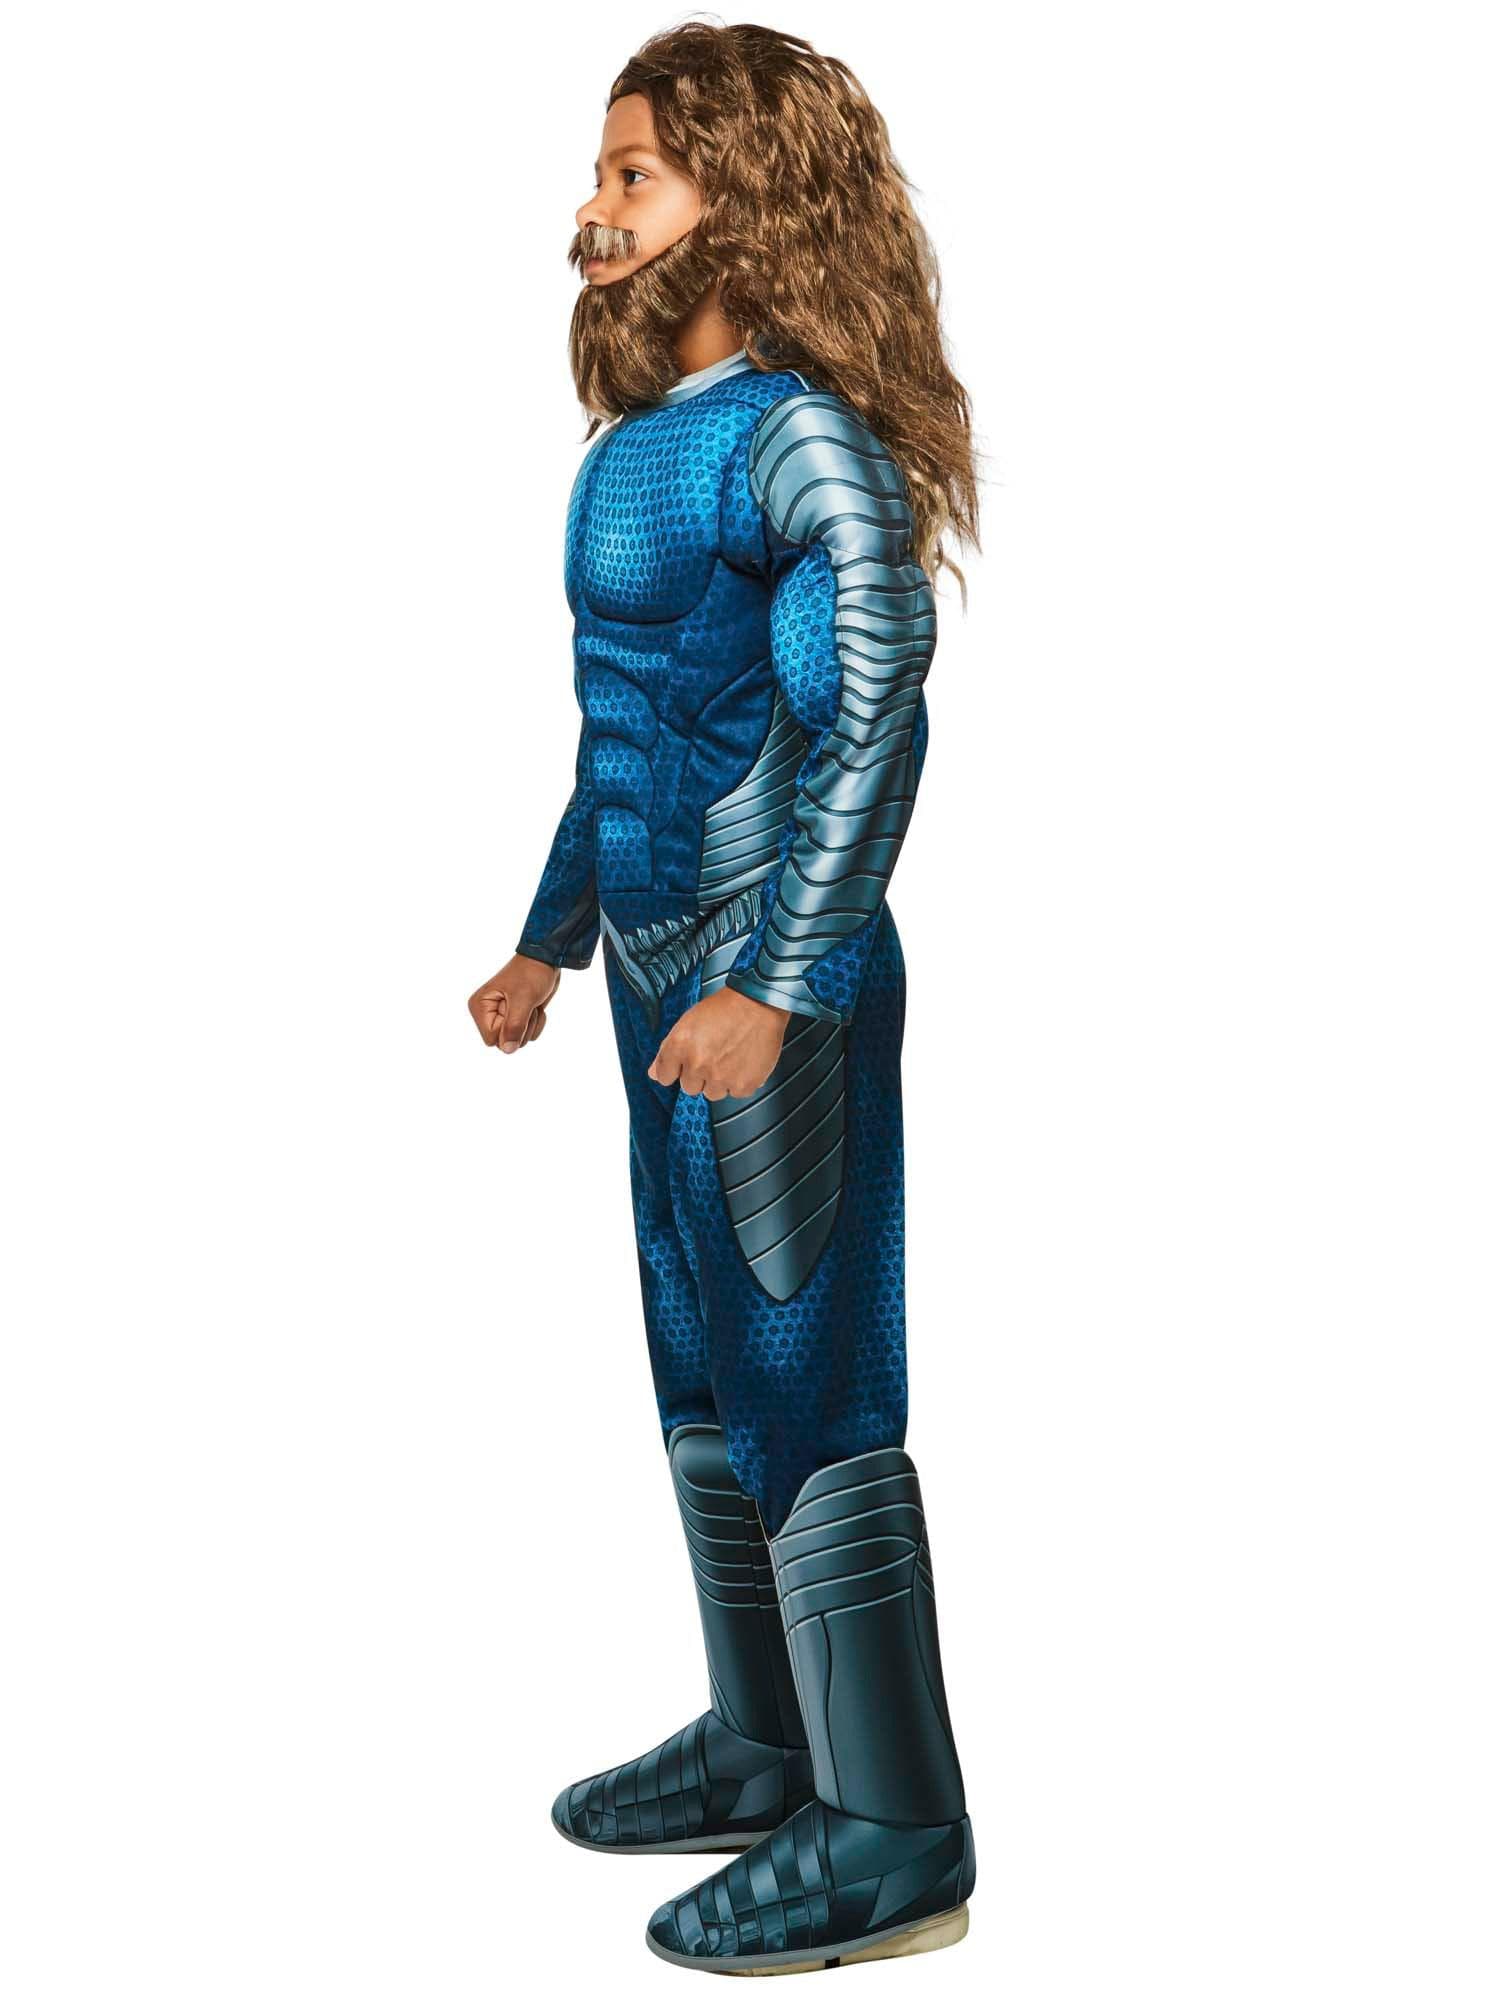 Boys' Aquaman and the Lost Kingdom Aquaman Costume - Deluxe - costumes.com